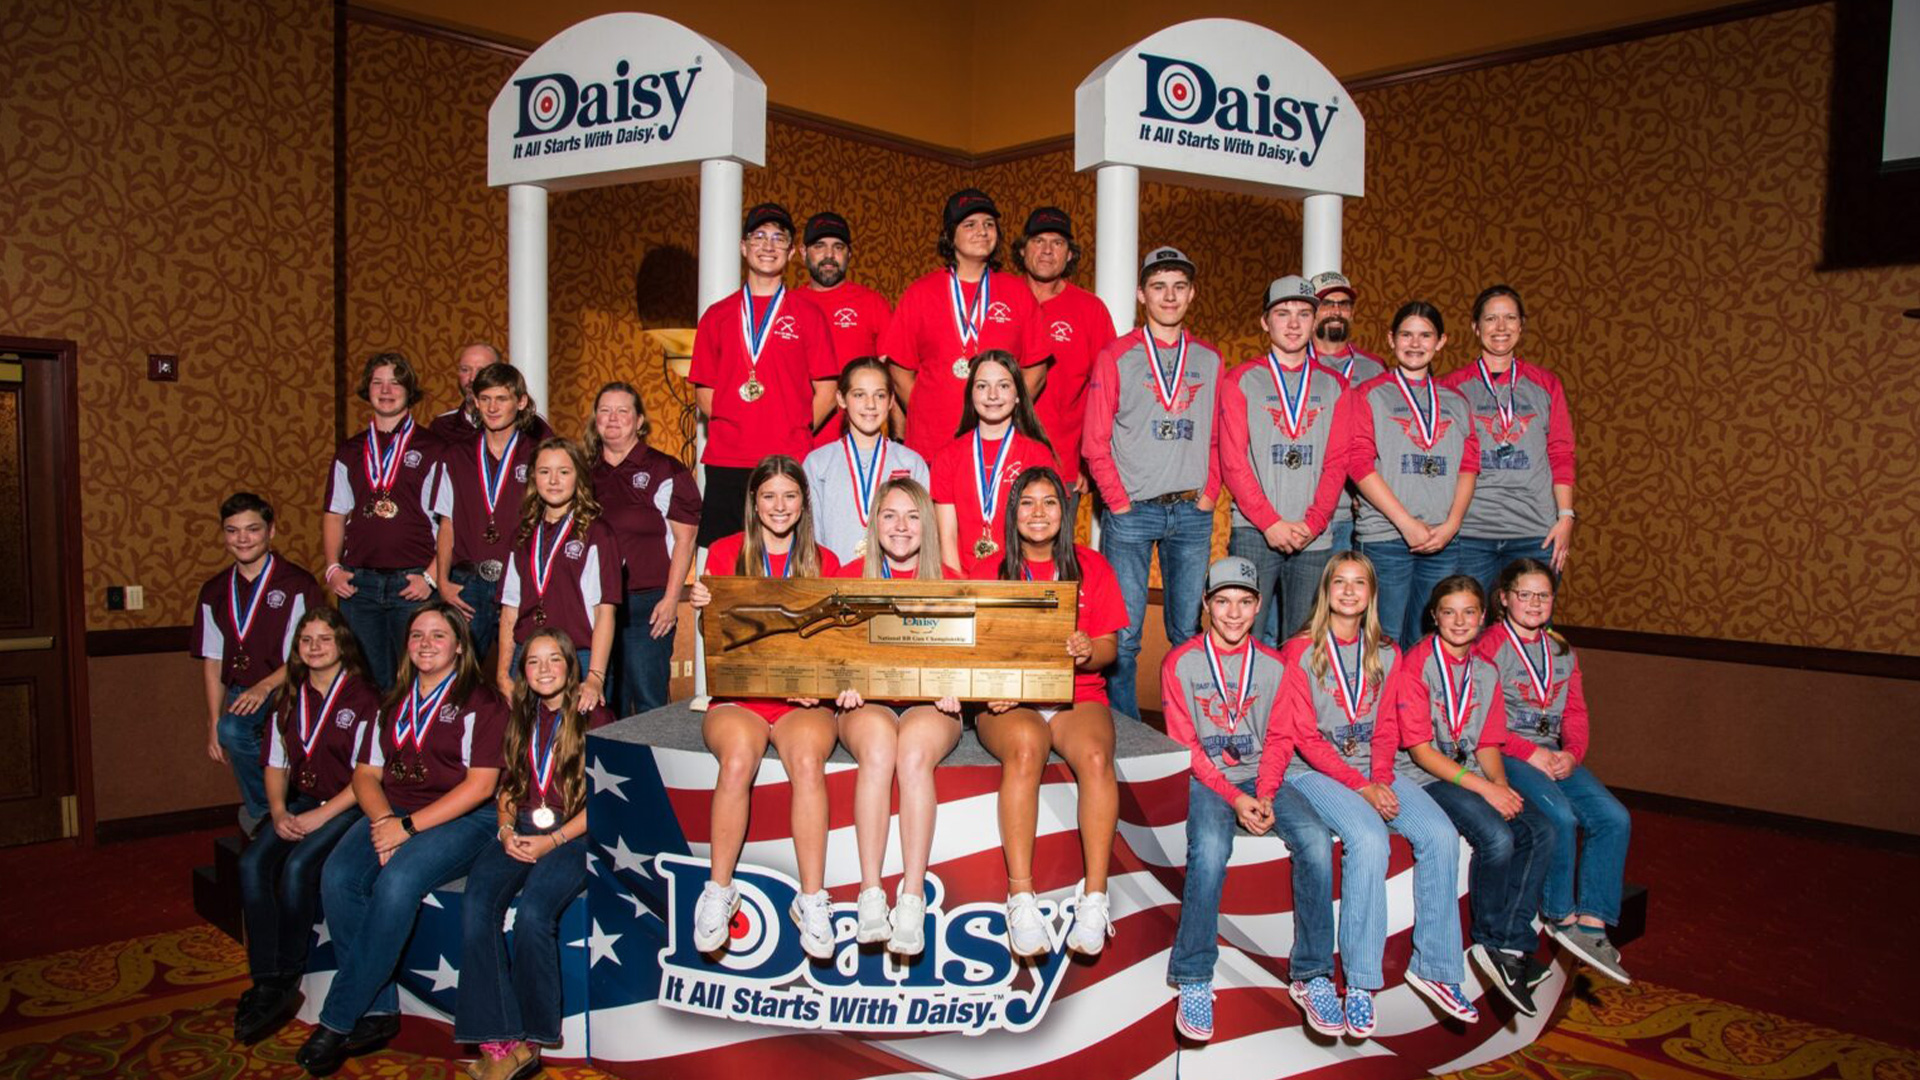 Daisy BB gun team champions